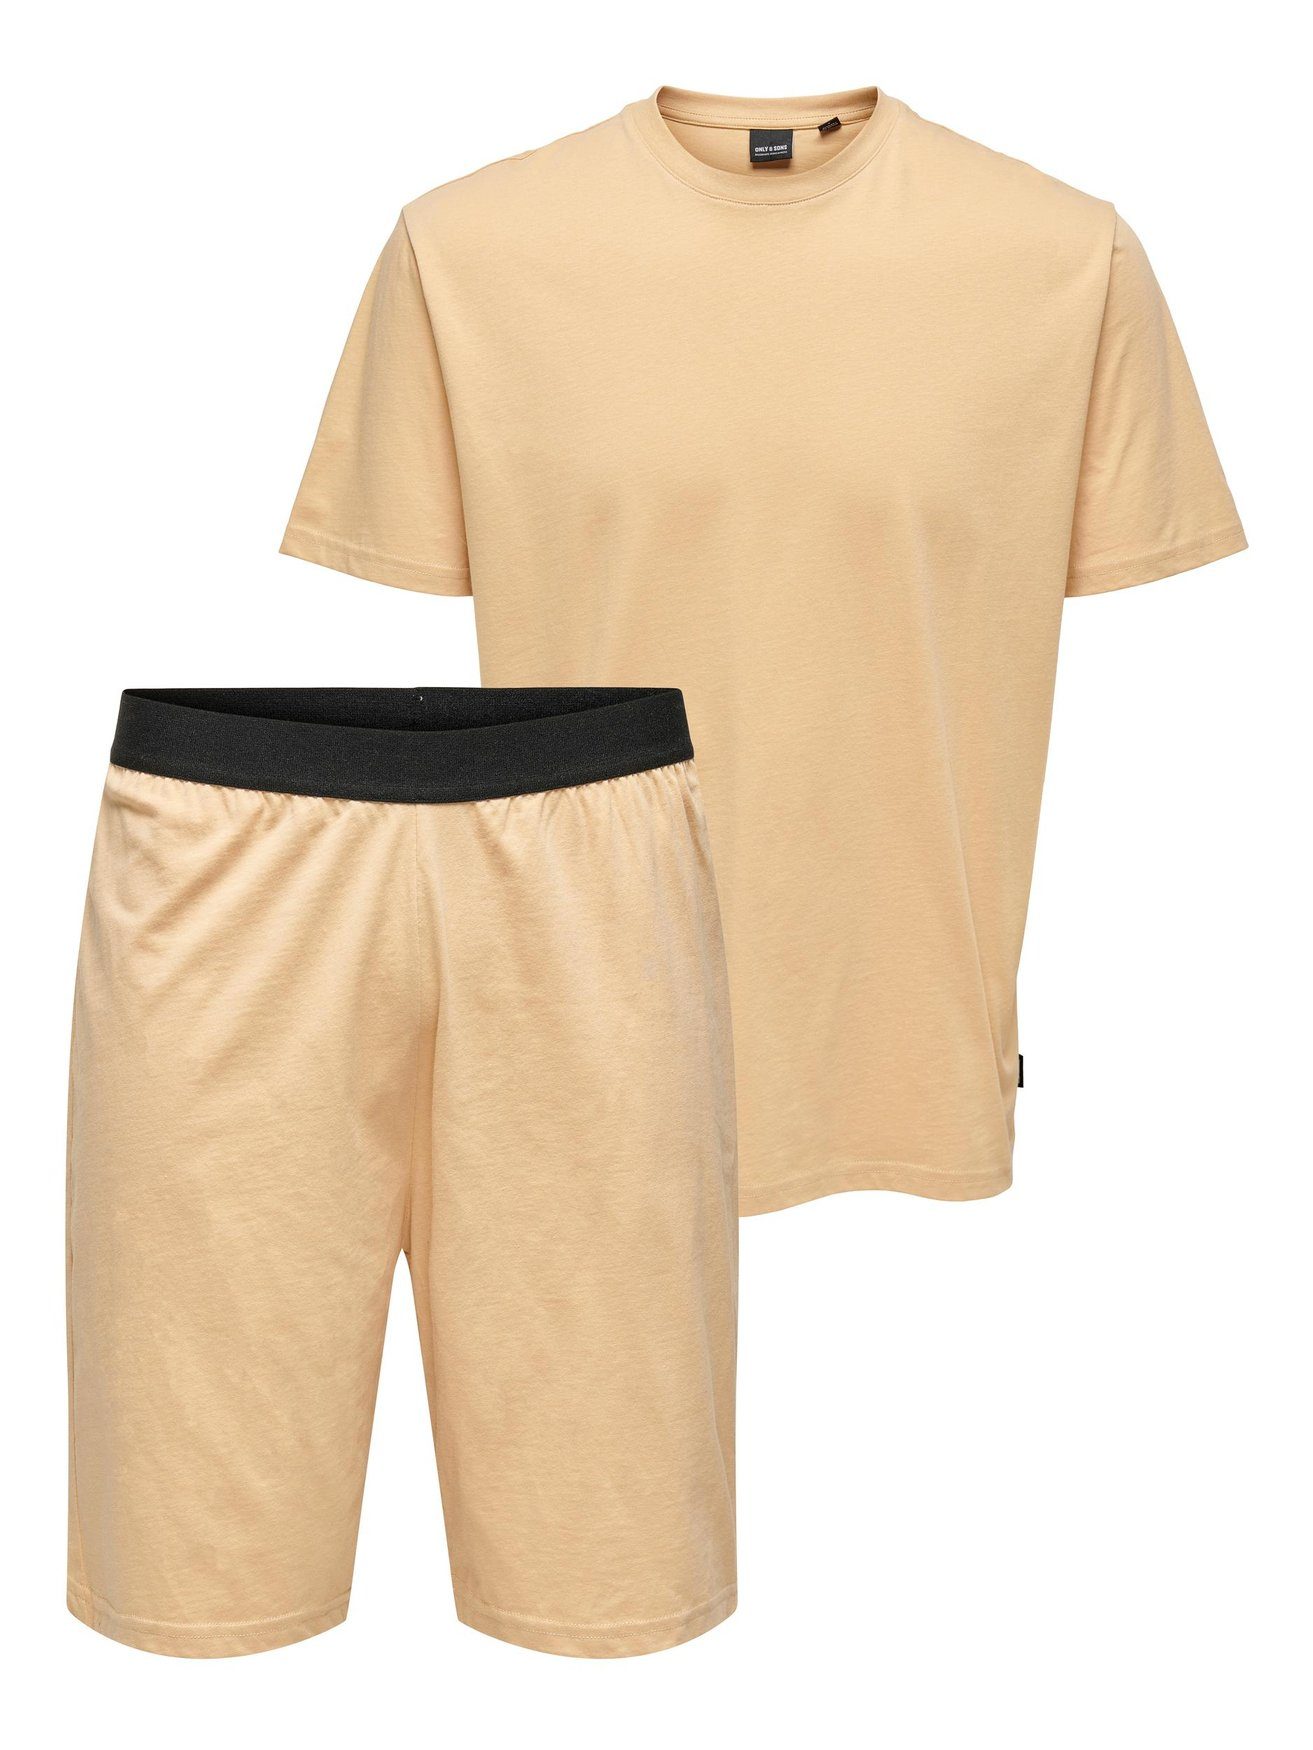 ONLY & SONS Schlafanzug 2-Teiliger Pyjama Schlafanzug Kurzarm T-Shirt & Hose ONSBILLY (2 tlg) 6509inBeige